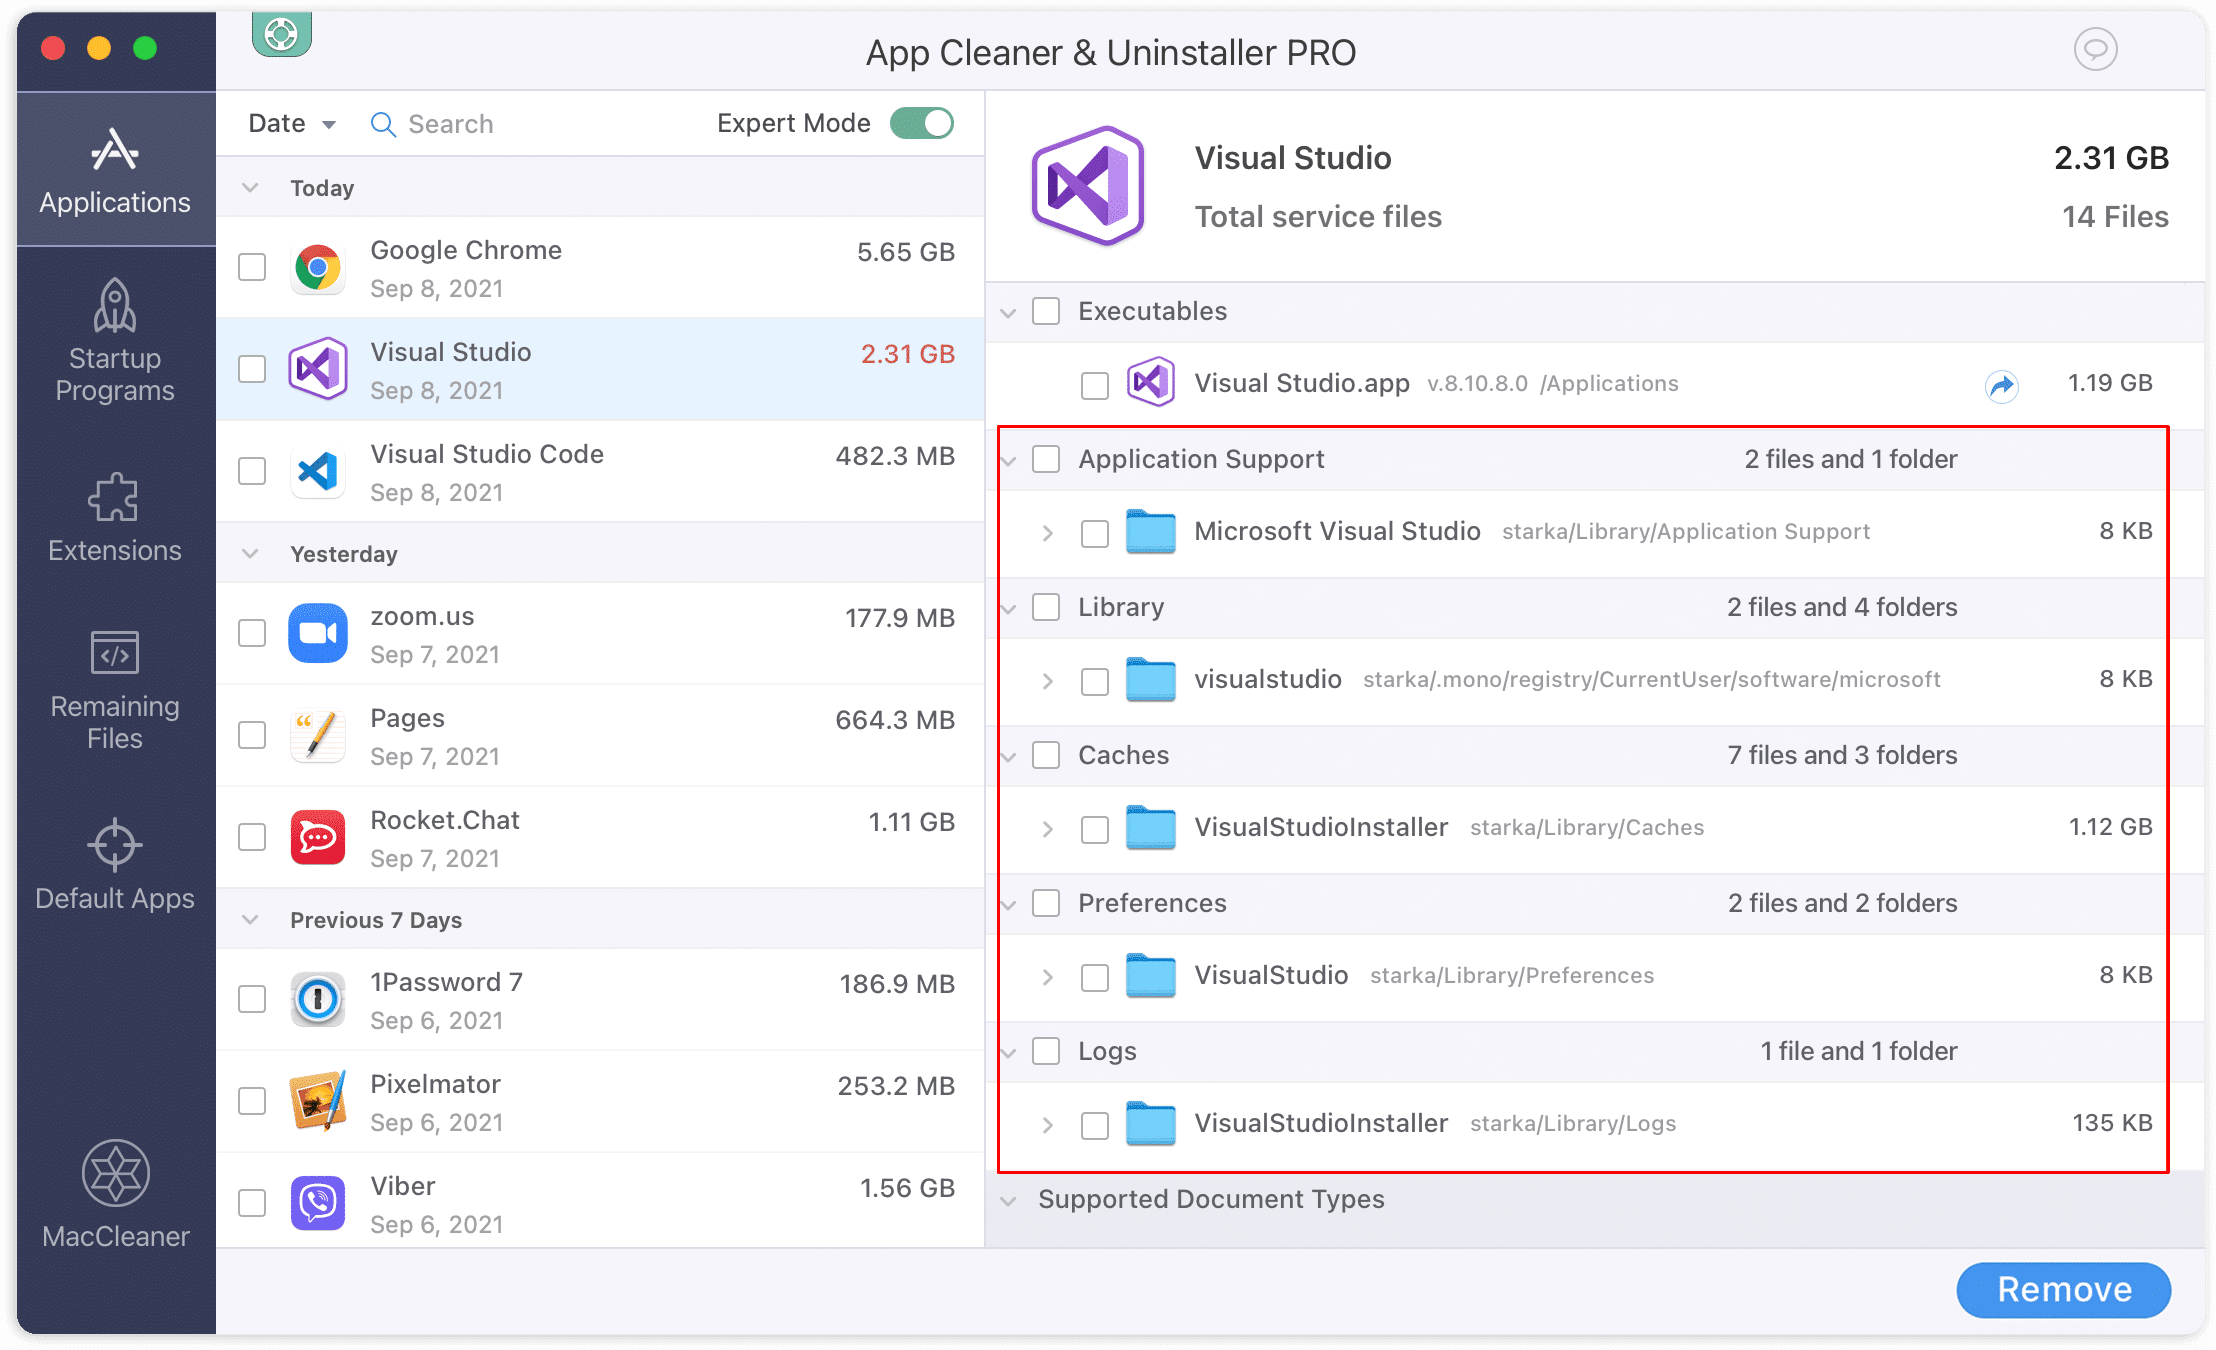 App Cleaner & Uninstaller showing Visual Studio service files